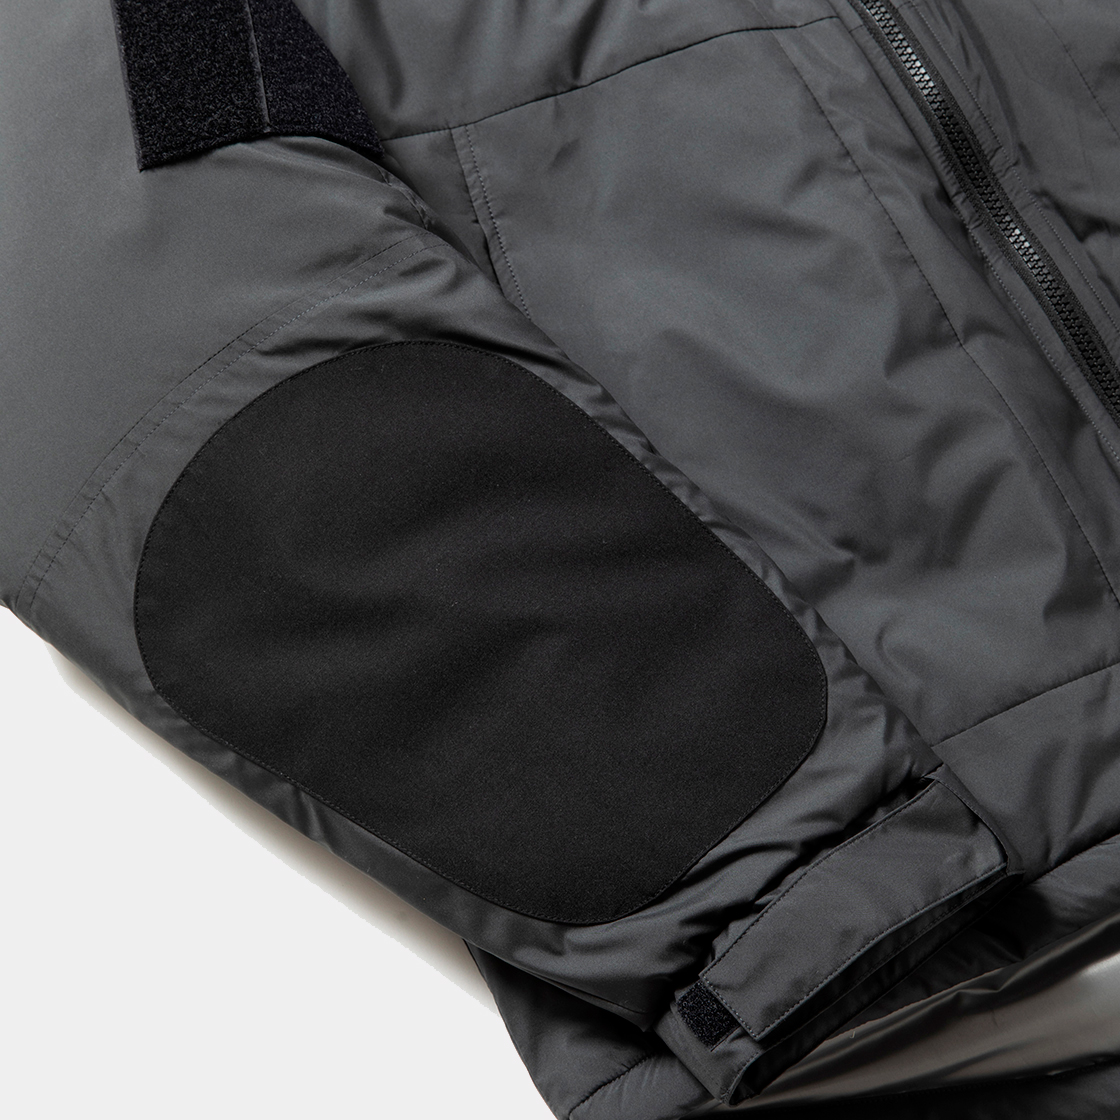 Protective Comfort Uniform Padding JKT / Graphite